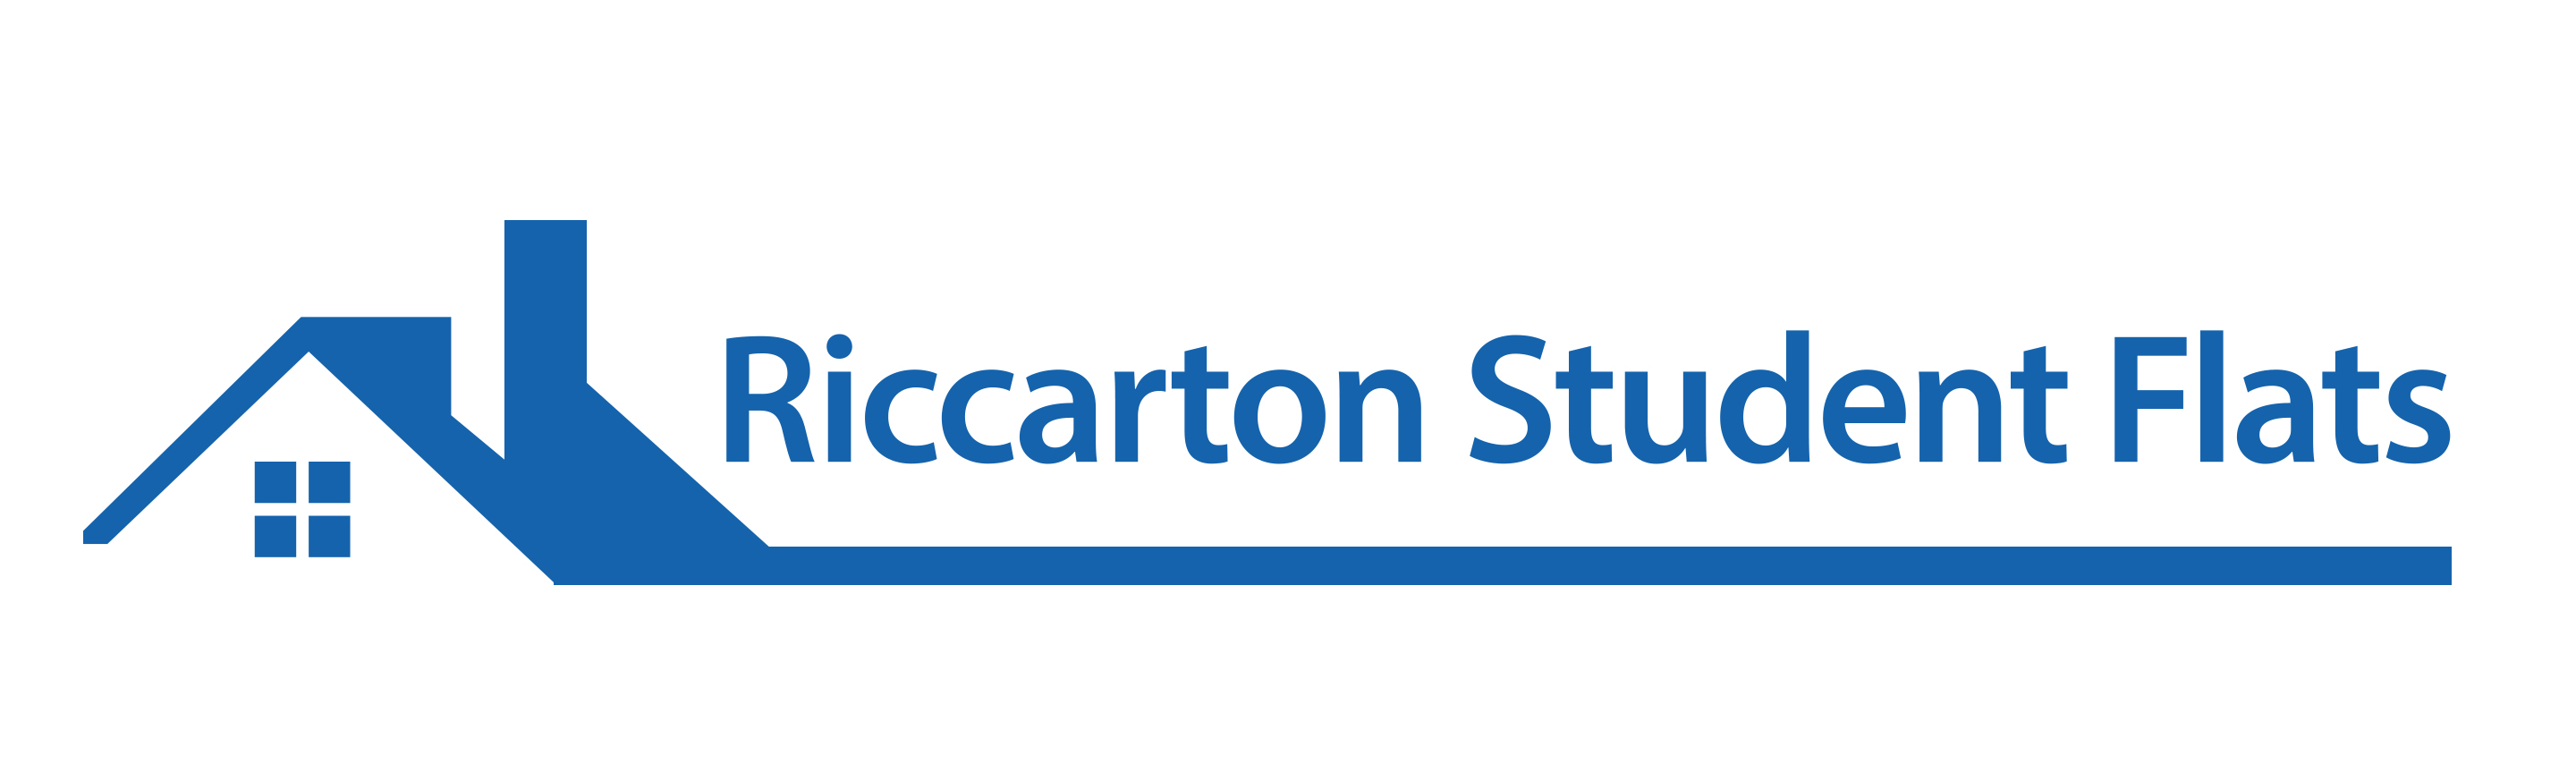 Riccarton Student Flats Logo V2